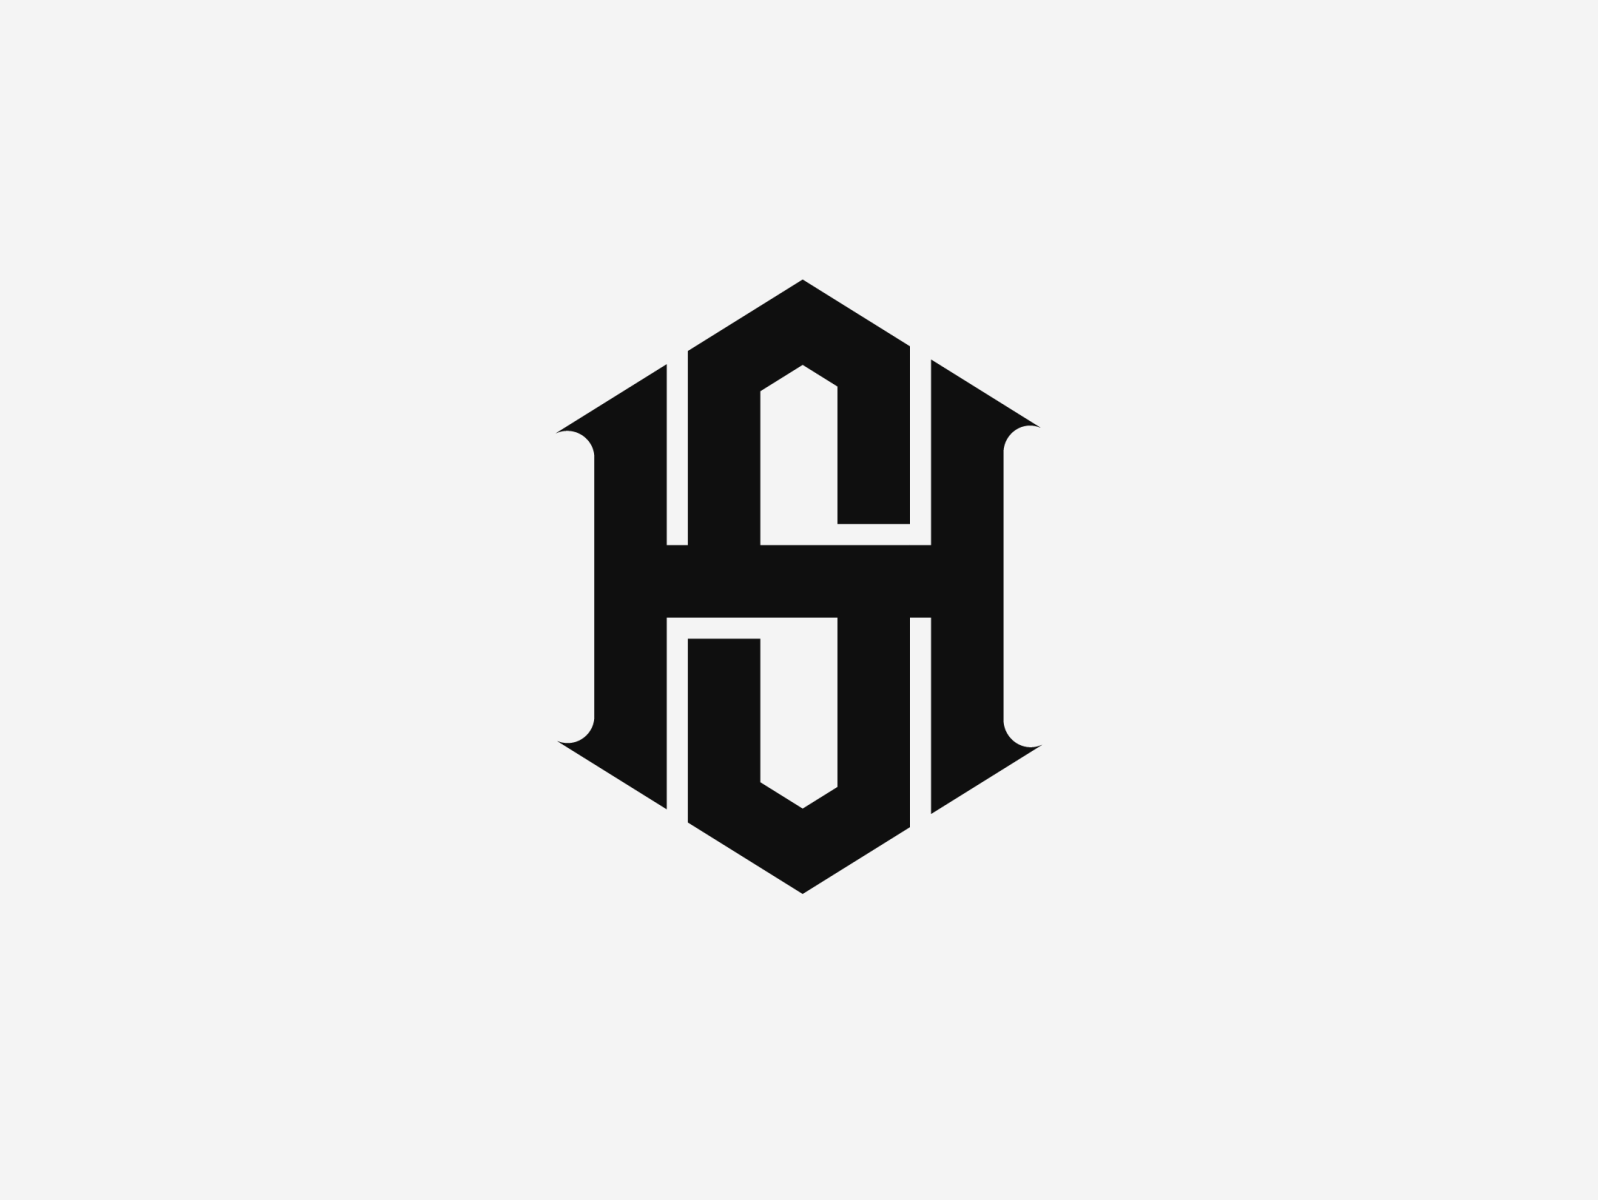 H + S Monogram Logo by Paskalis Dari Ngere on Dribbble